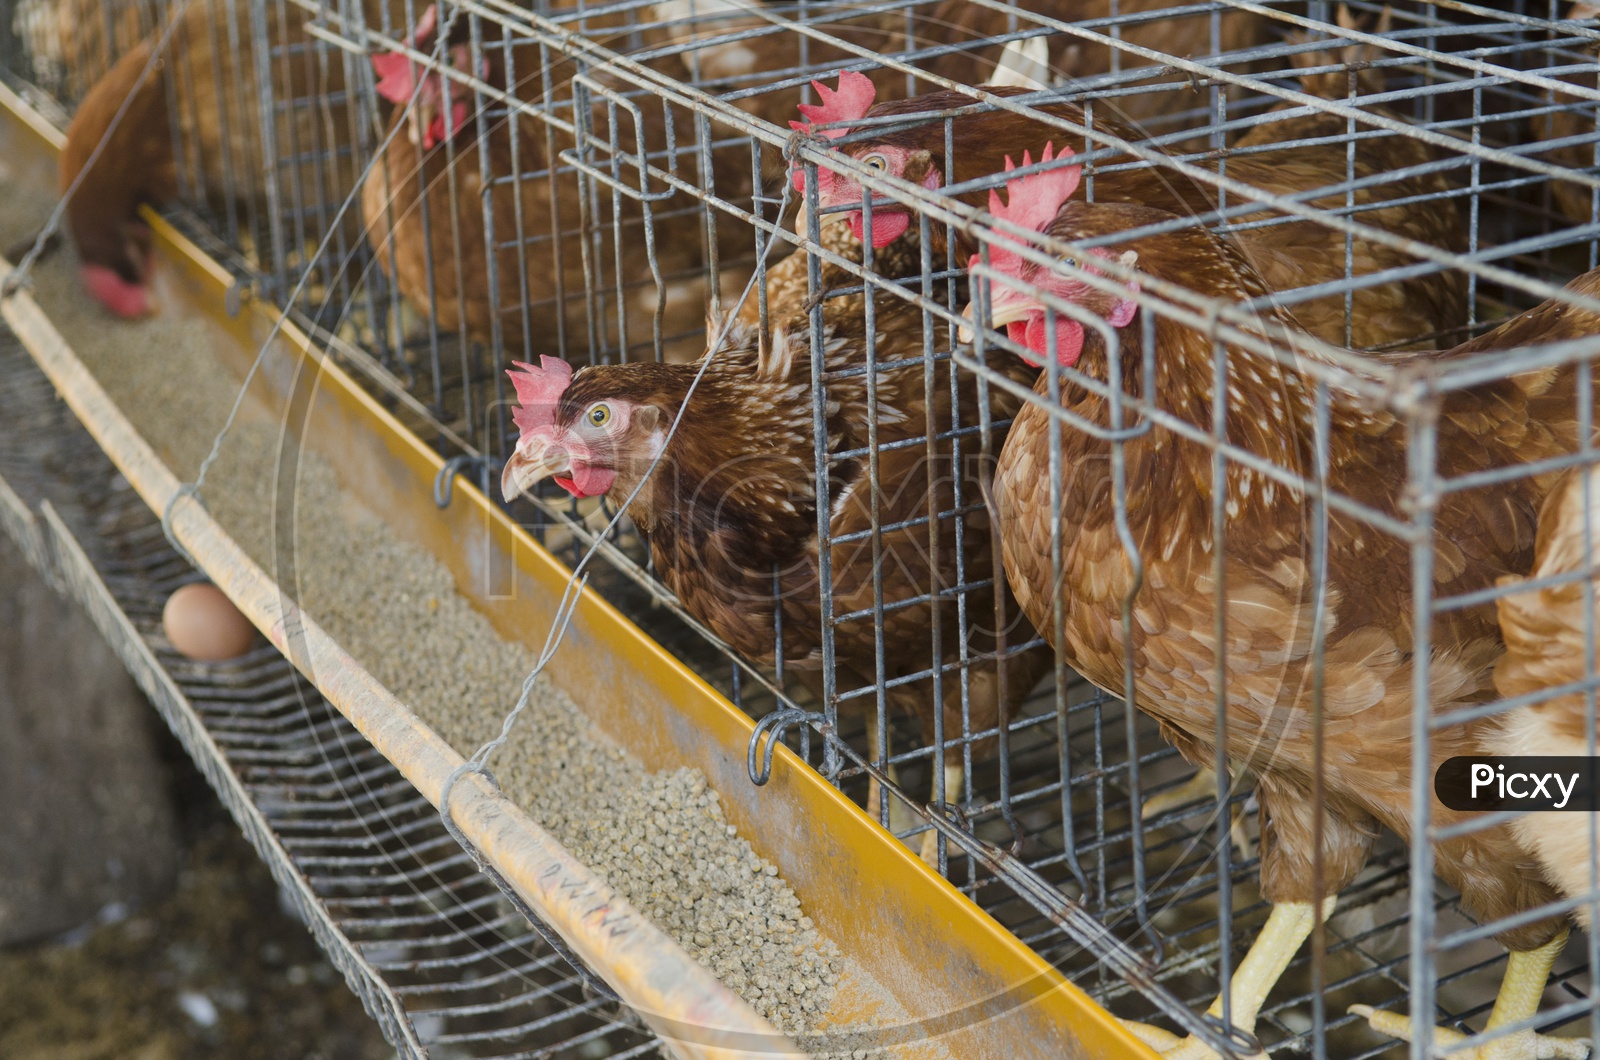 Chickens in a Farm, Thailand